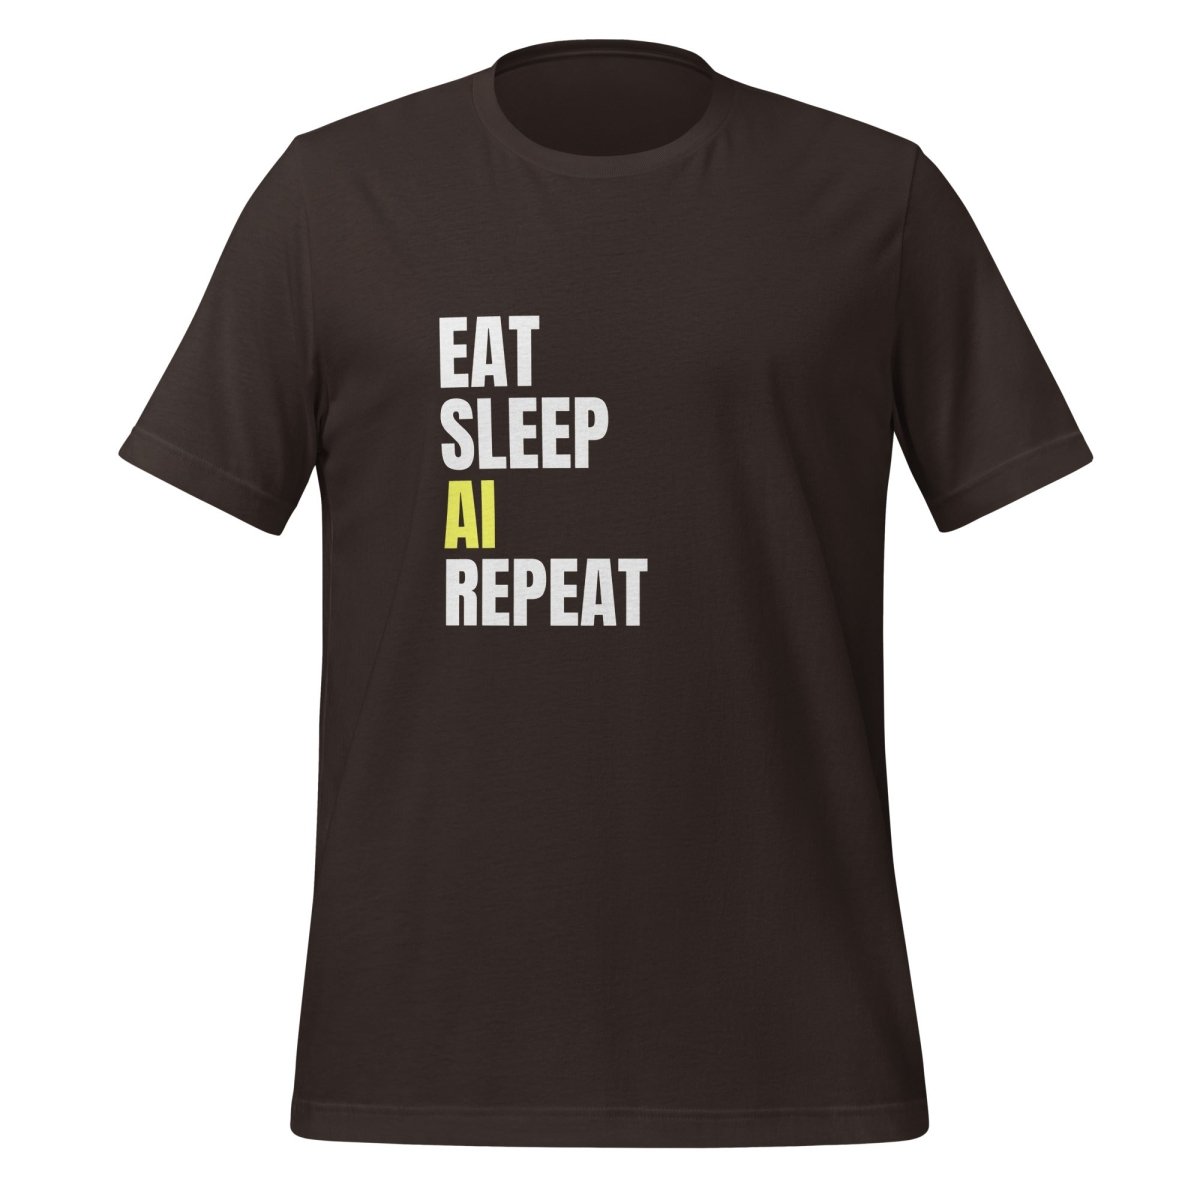 EAT SLEEP AI REPEAT T - Shirt 3 (unisex) - Brown - AI Store